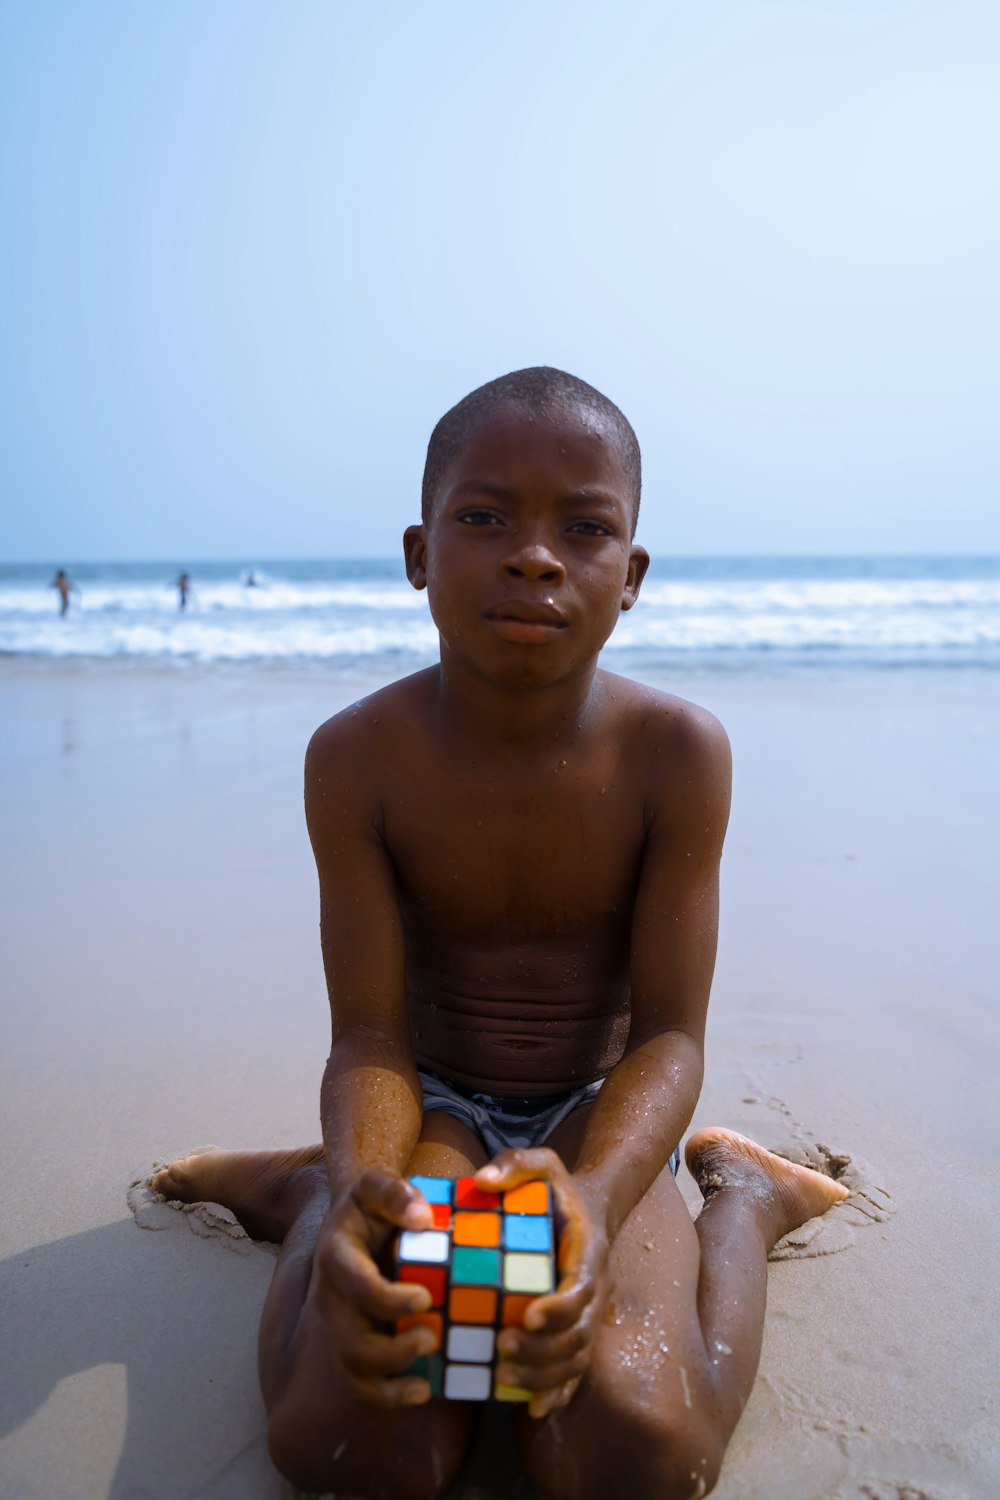 a young boy sitting on a beach holding a rubik cube